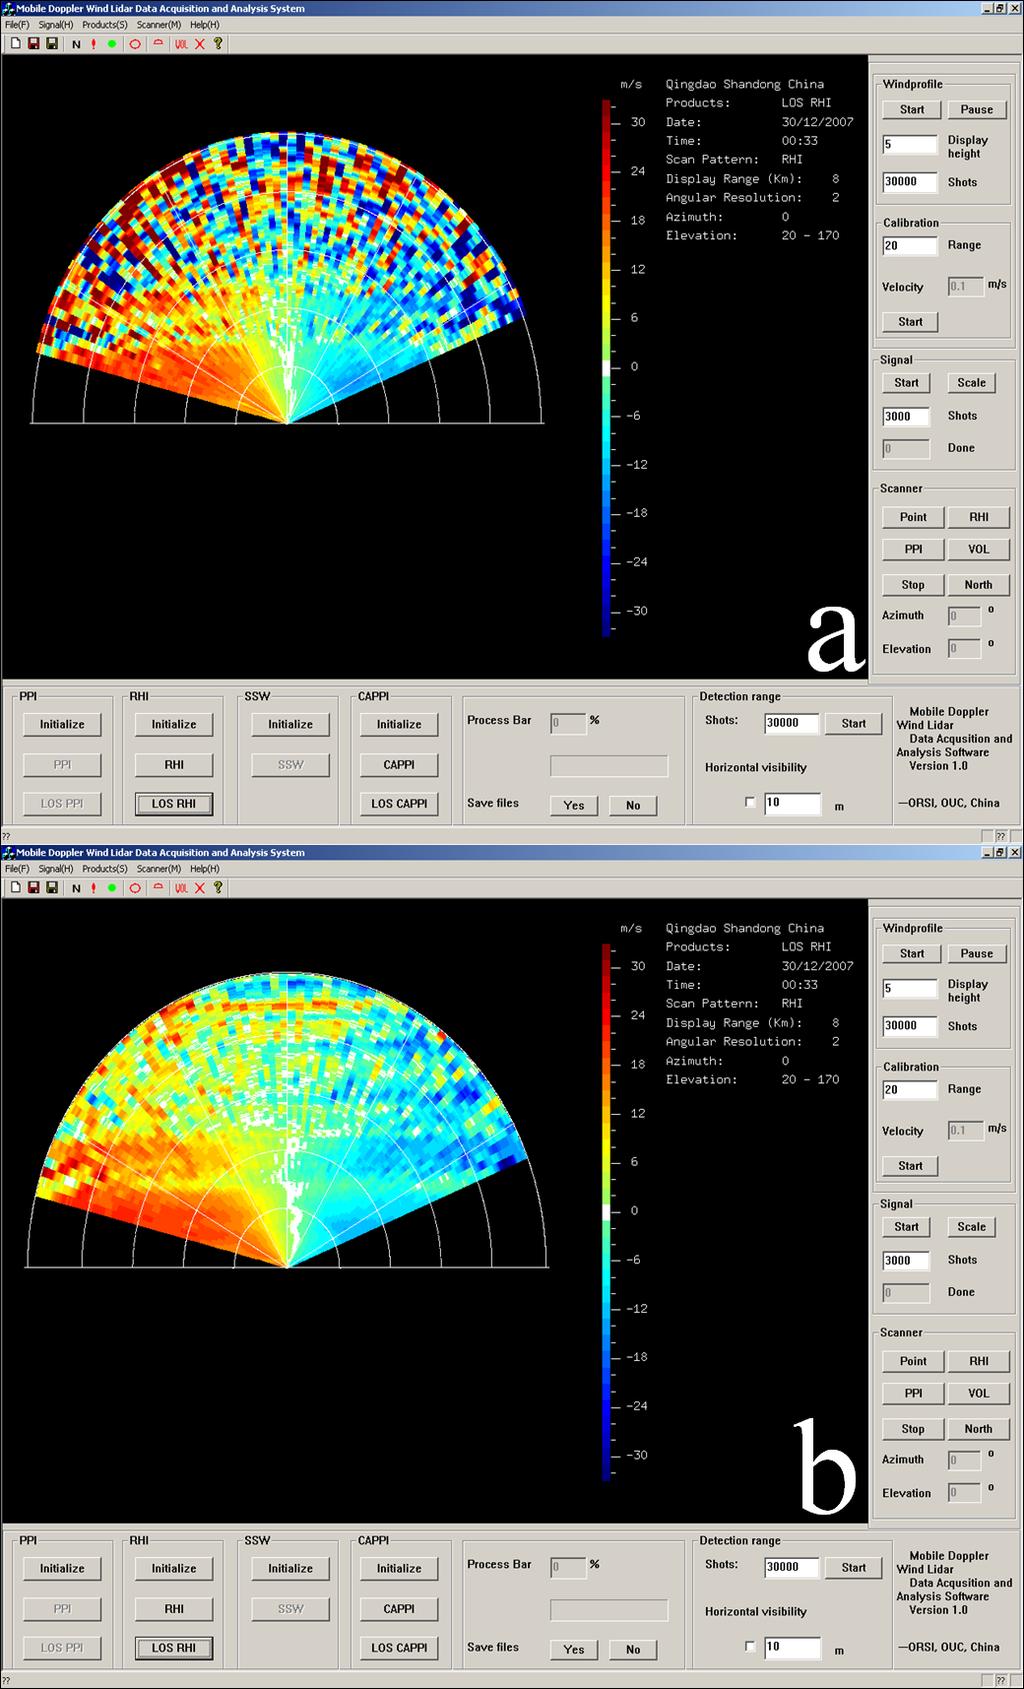 Measurements by I2 Doppler Lidar RHI scan